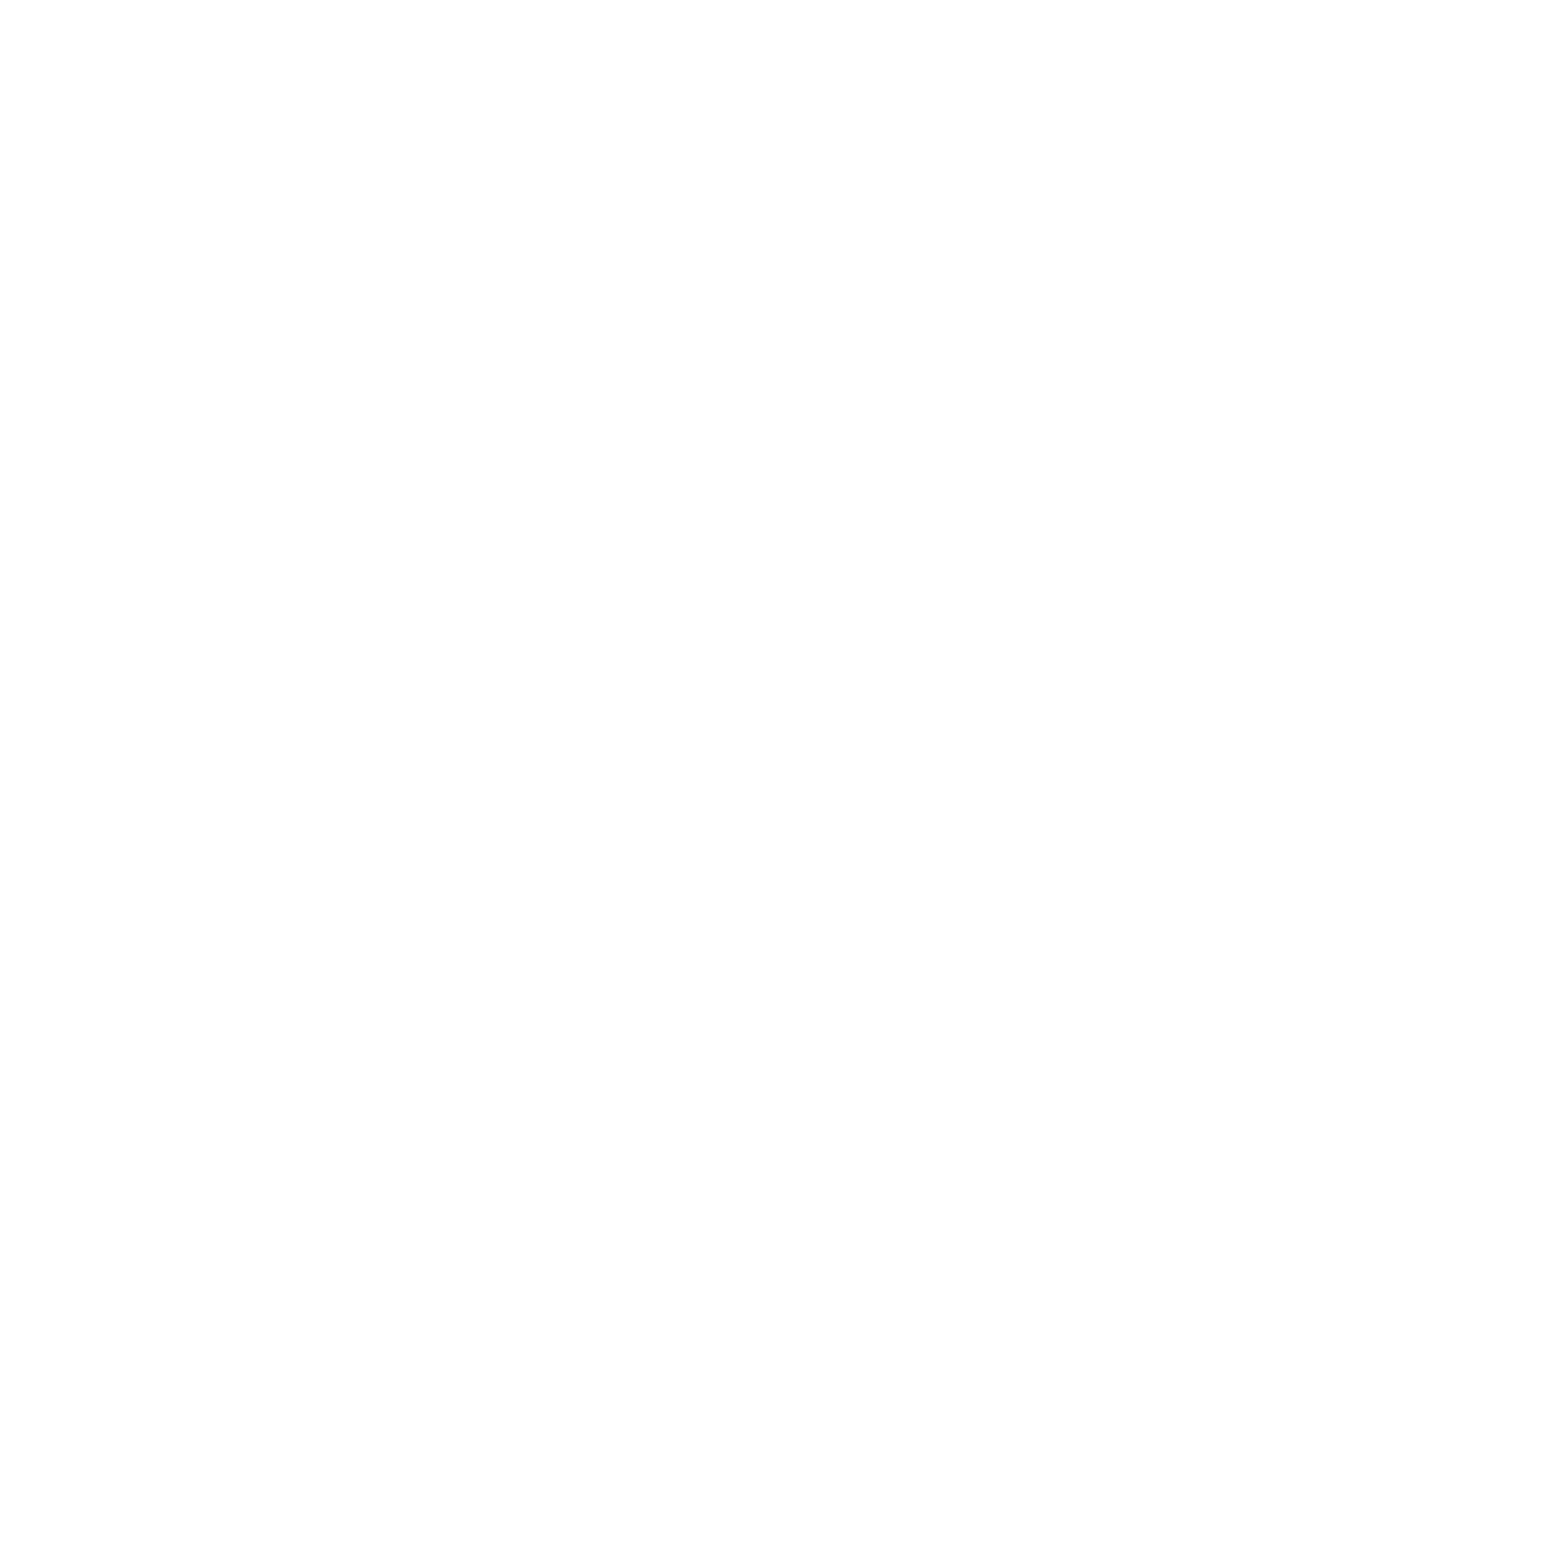 Metso logo for dark backgrounds (transparent PNG)